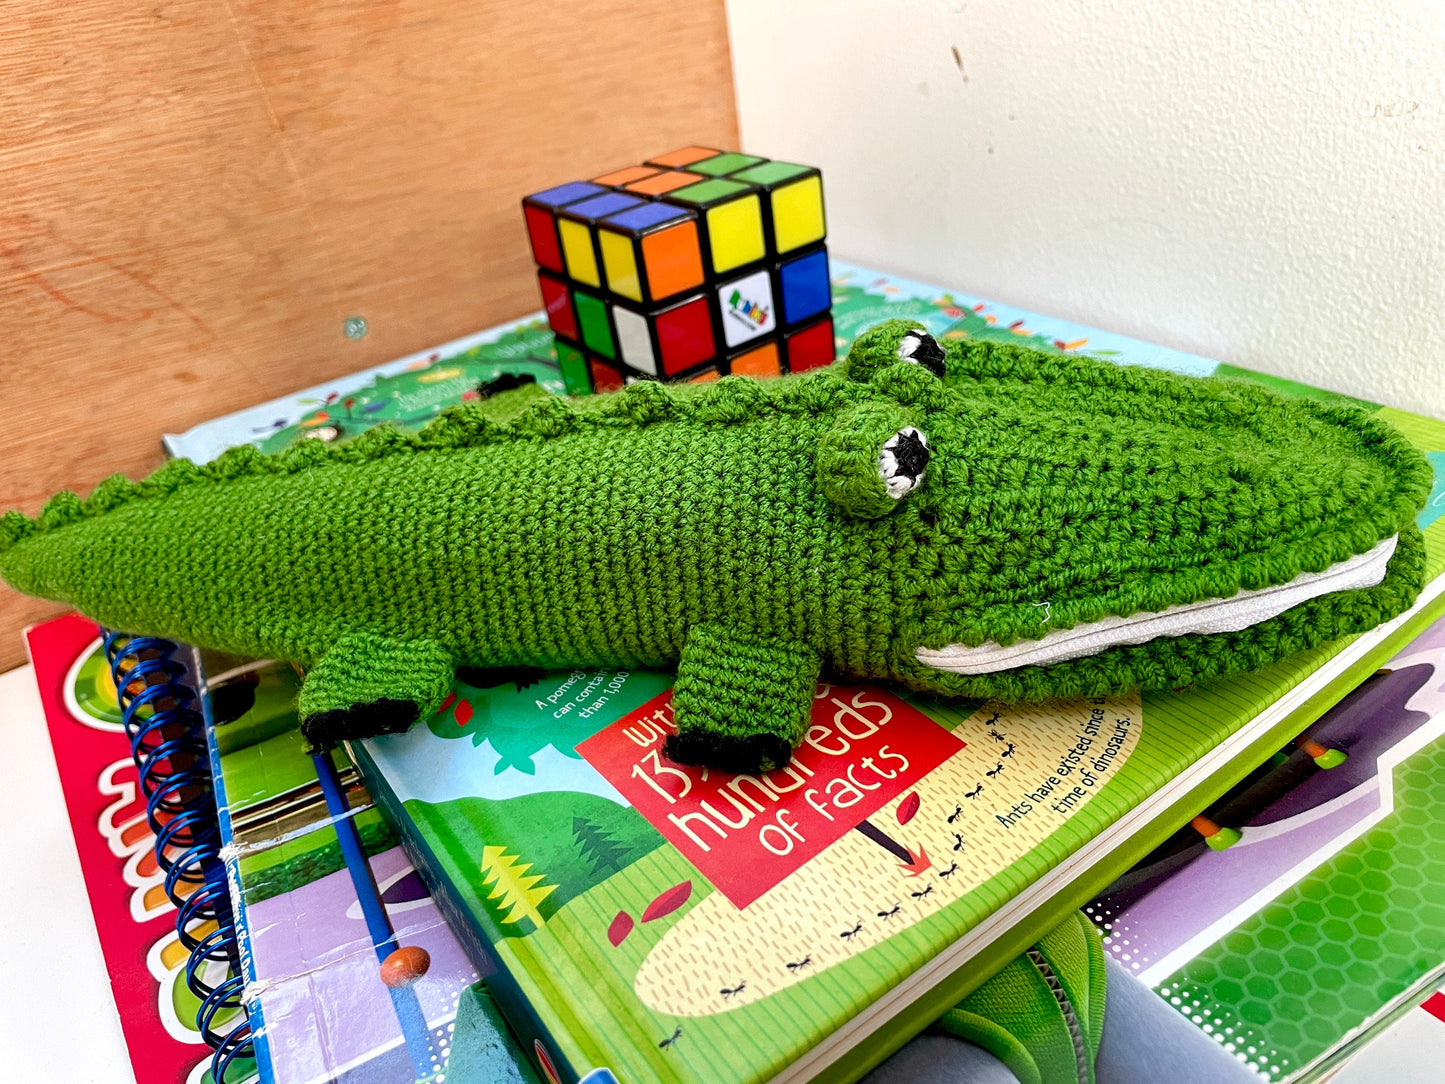 Crocodile Crochet Pencil Case